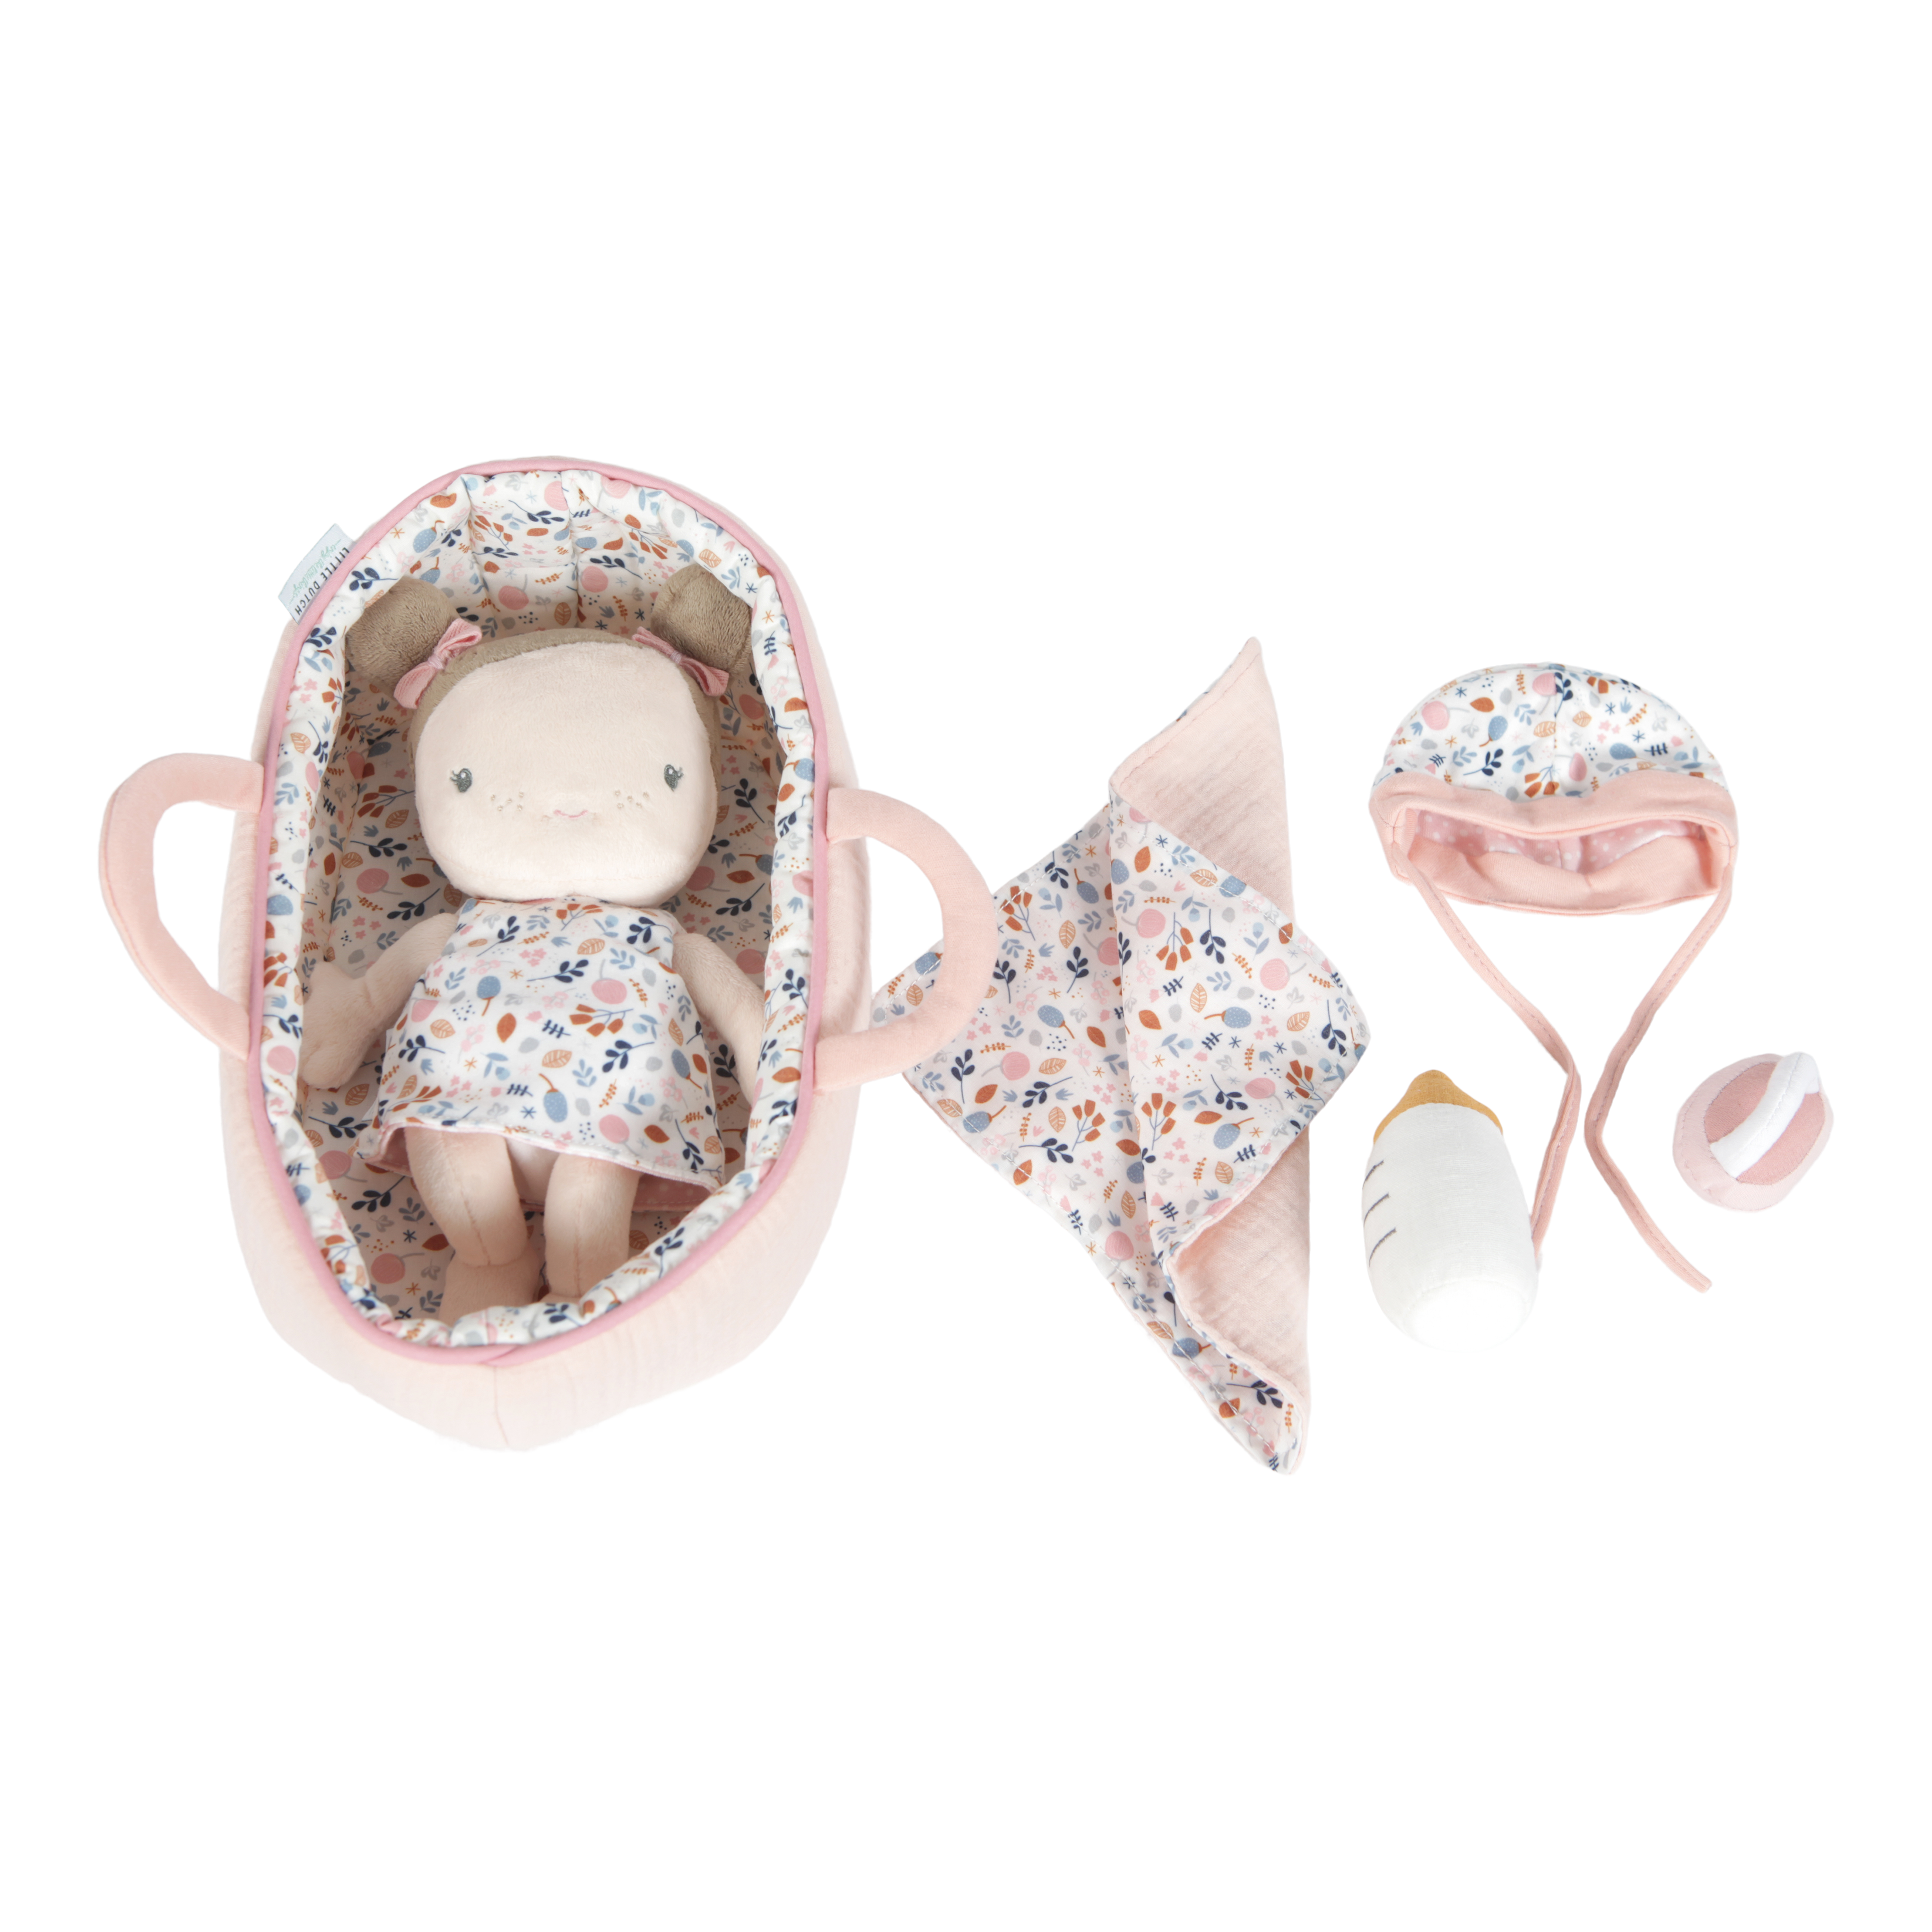 Ld4528 Baby Doll Rosa Product (5)